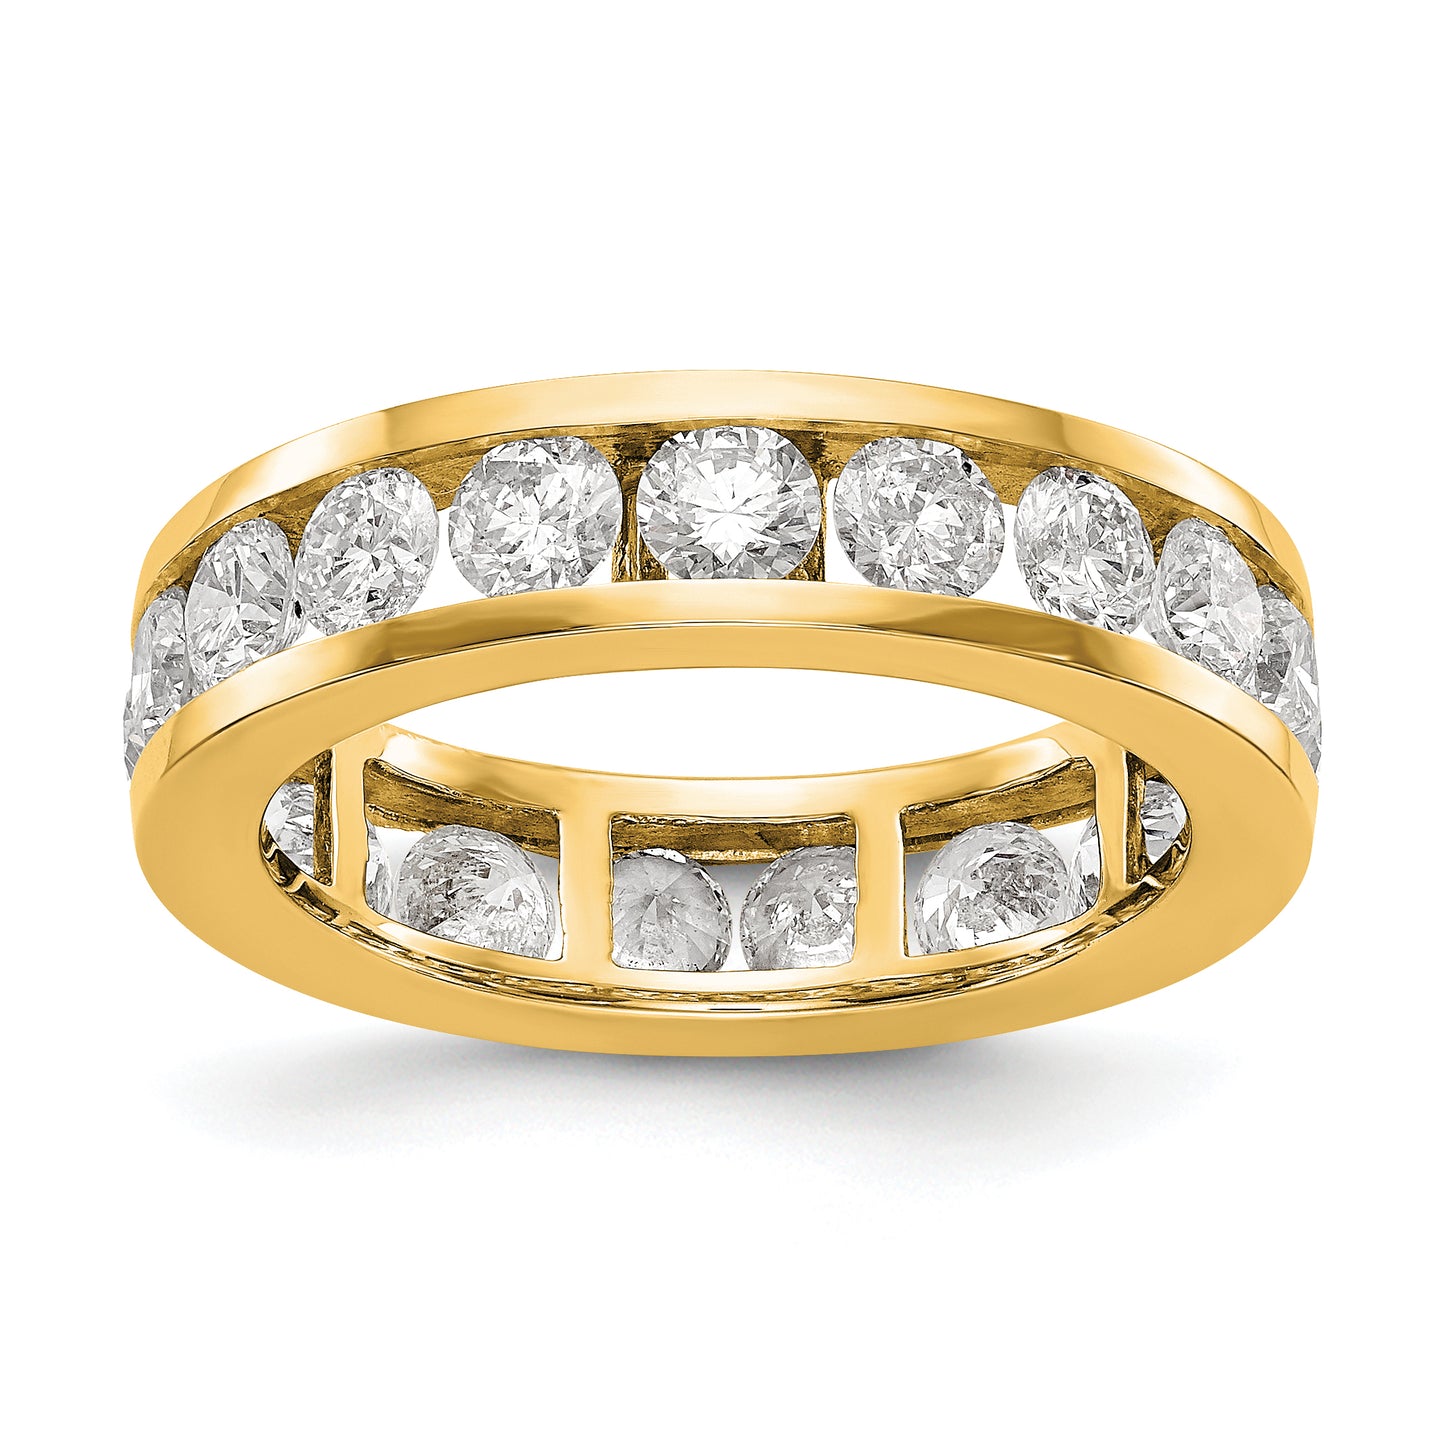 2 Ct. Natural Diamond Womens Eternity Anniversary Wedding Band Ring in 14k Yellow Gold